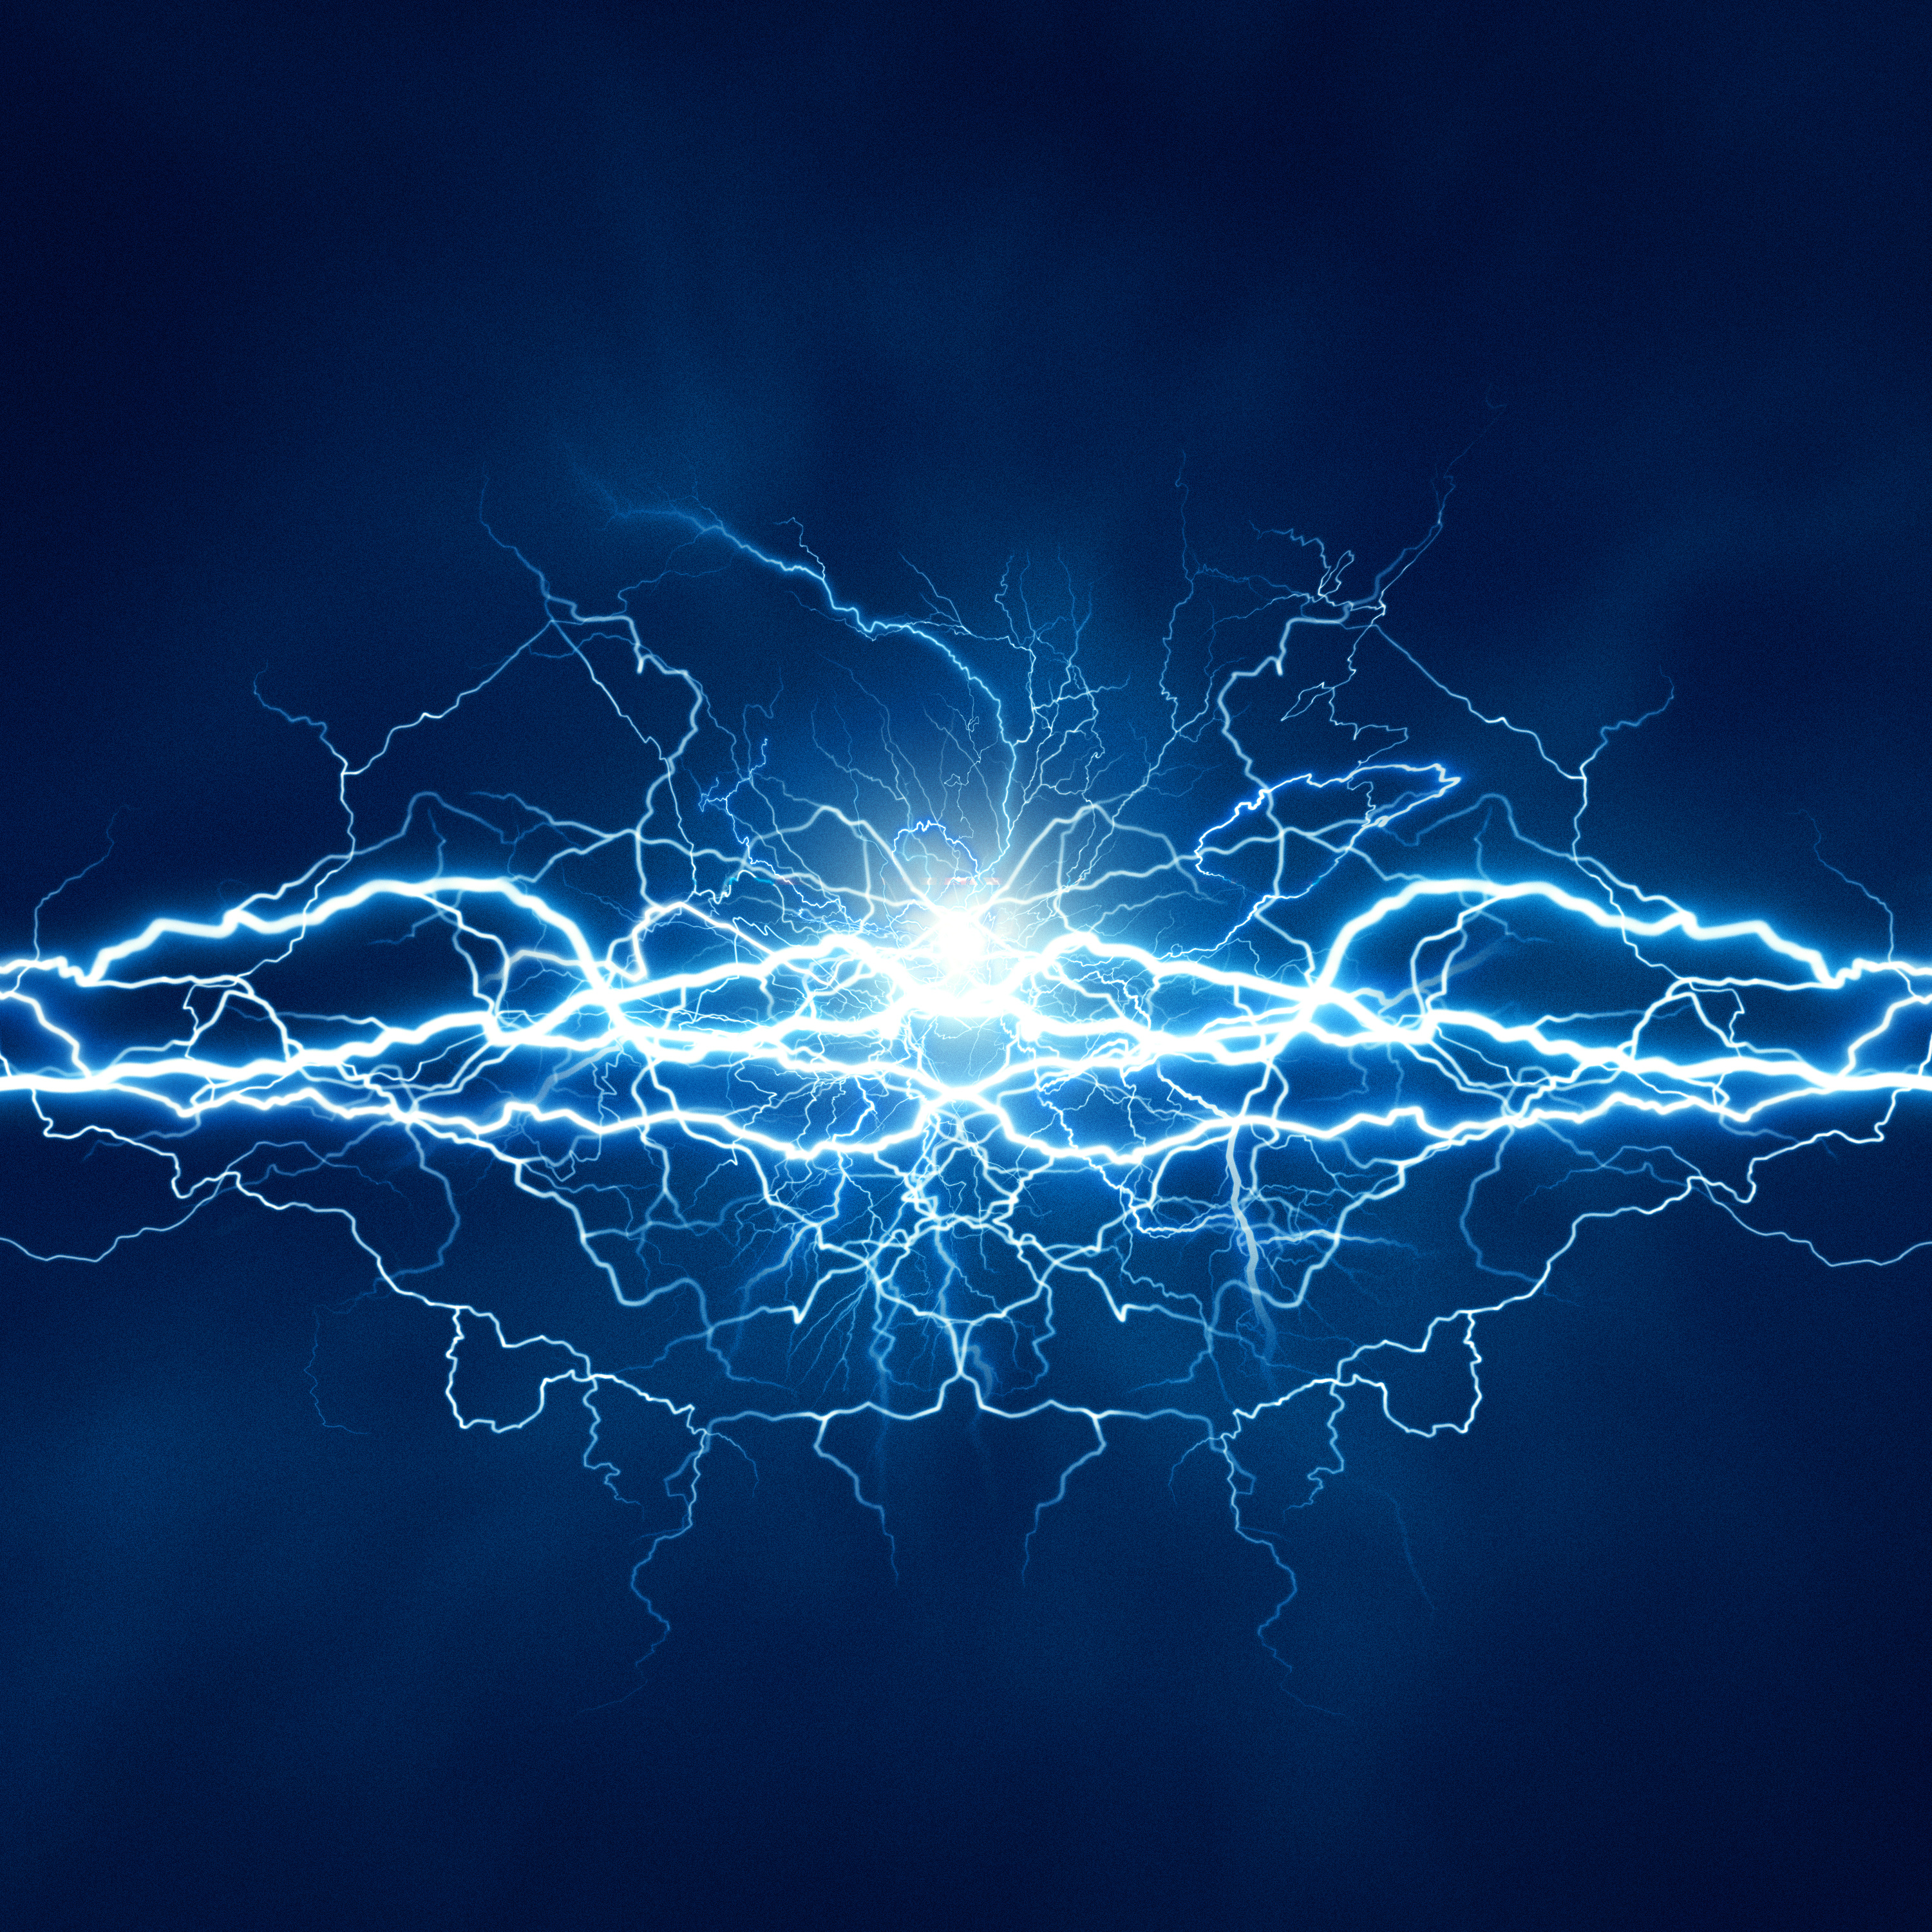 electric burst on blue background